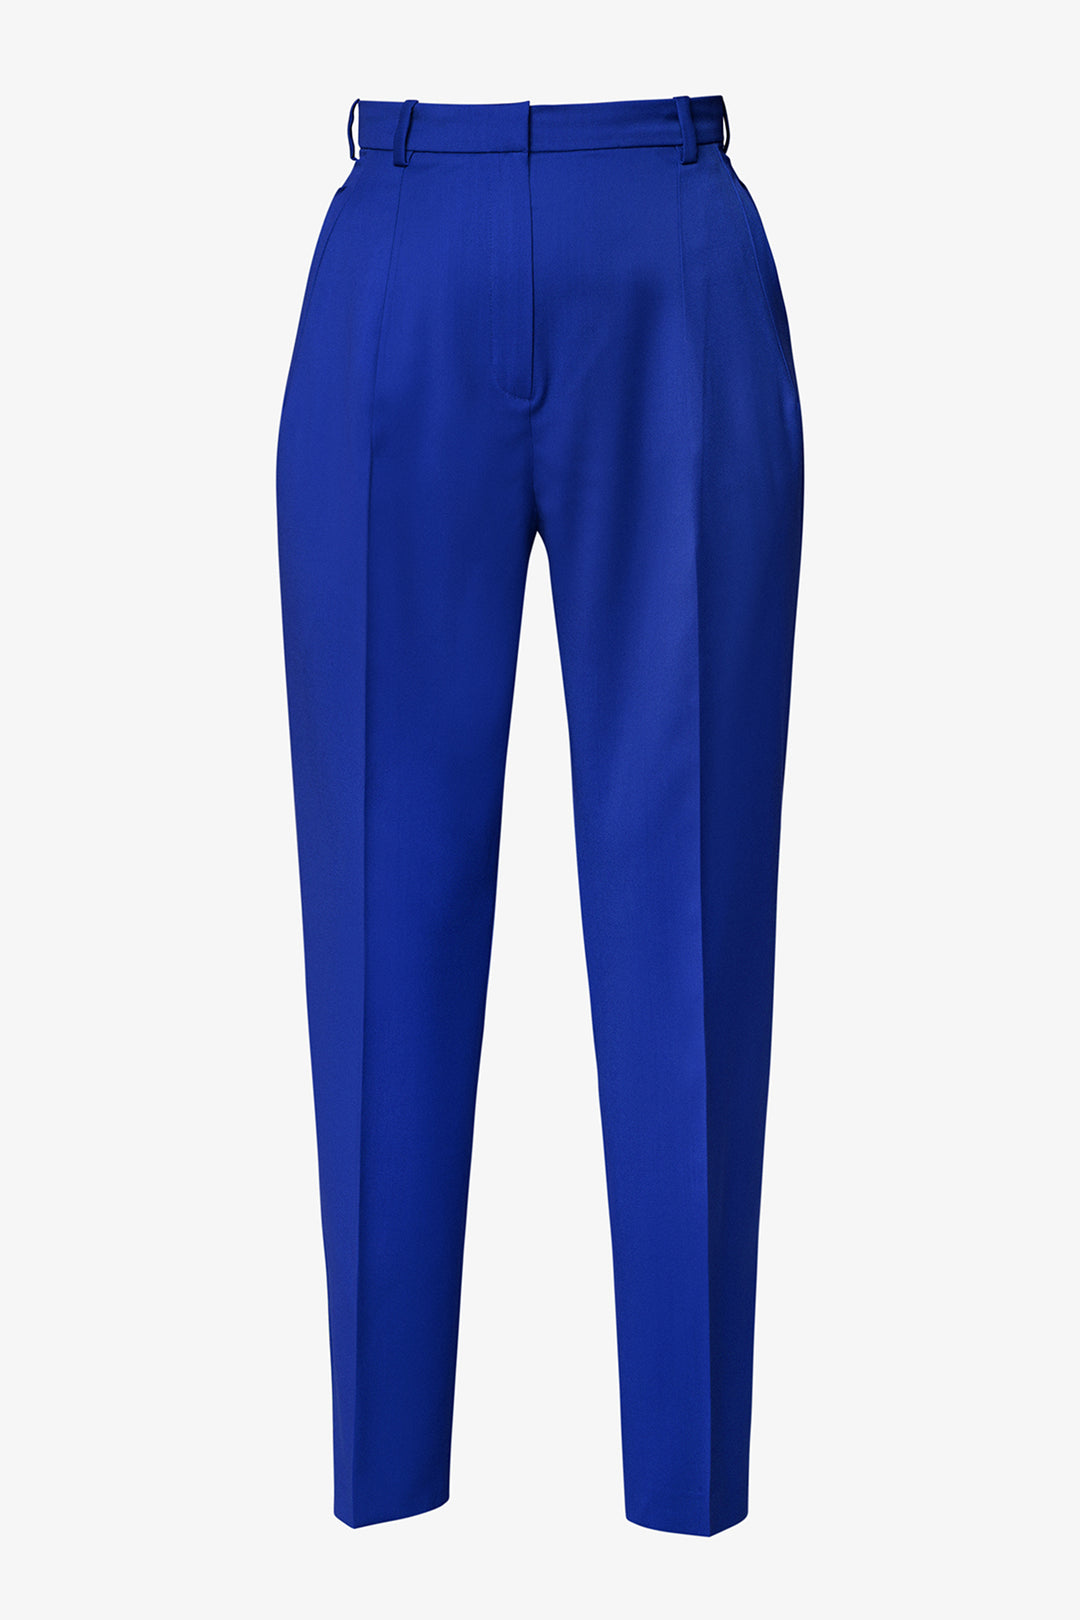 Electric Blue Classic Conic Pants